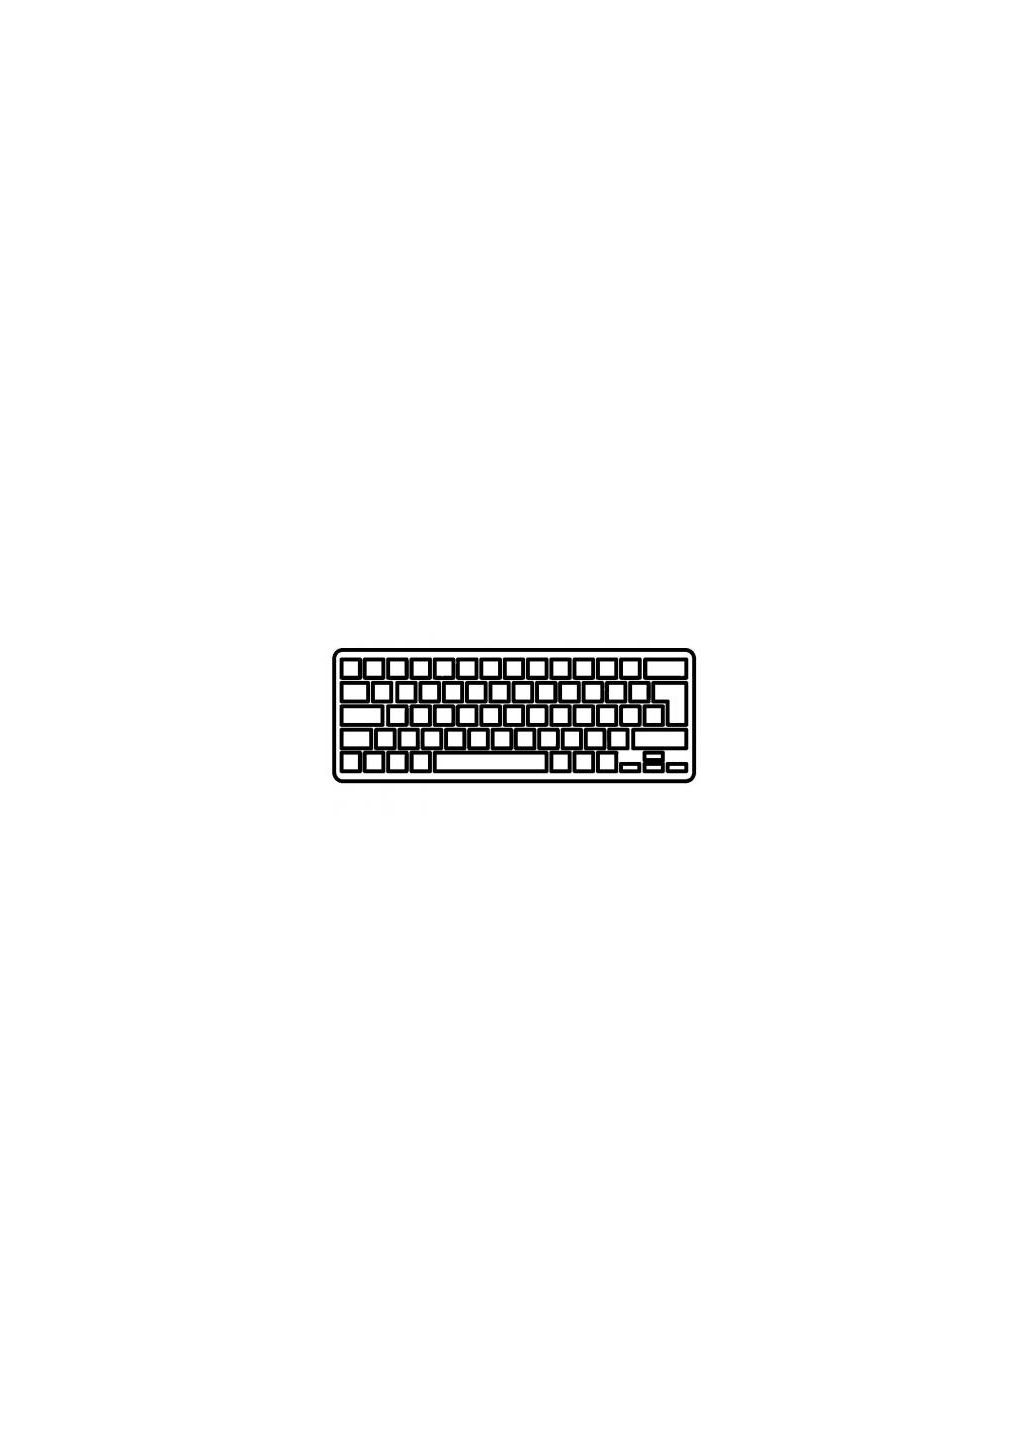 Клавиатура ноутбука Adamo 13A101 серебро с подсветкой UA (A43523) Dell adamo 13-a101 серебро с подсветкой ua (276707114)